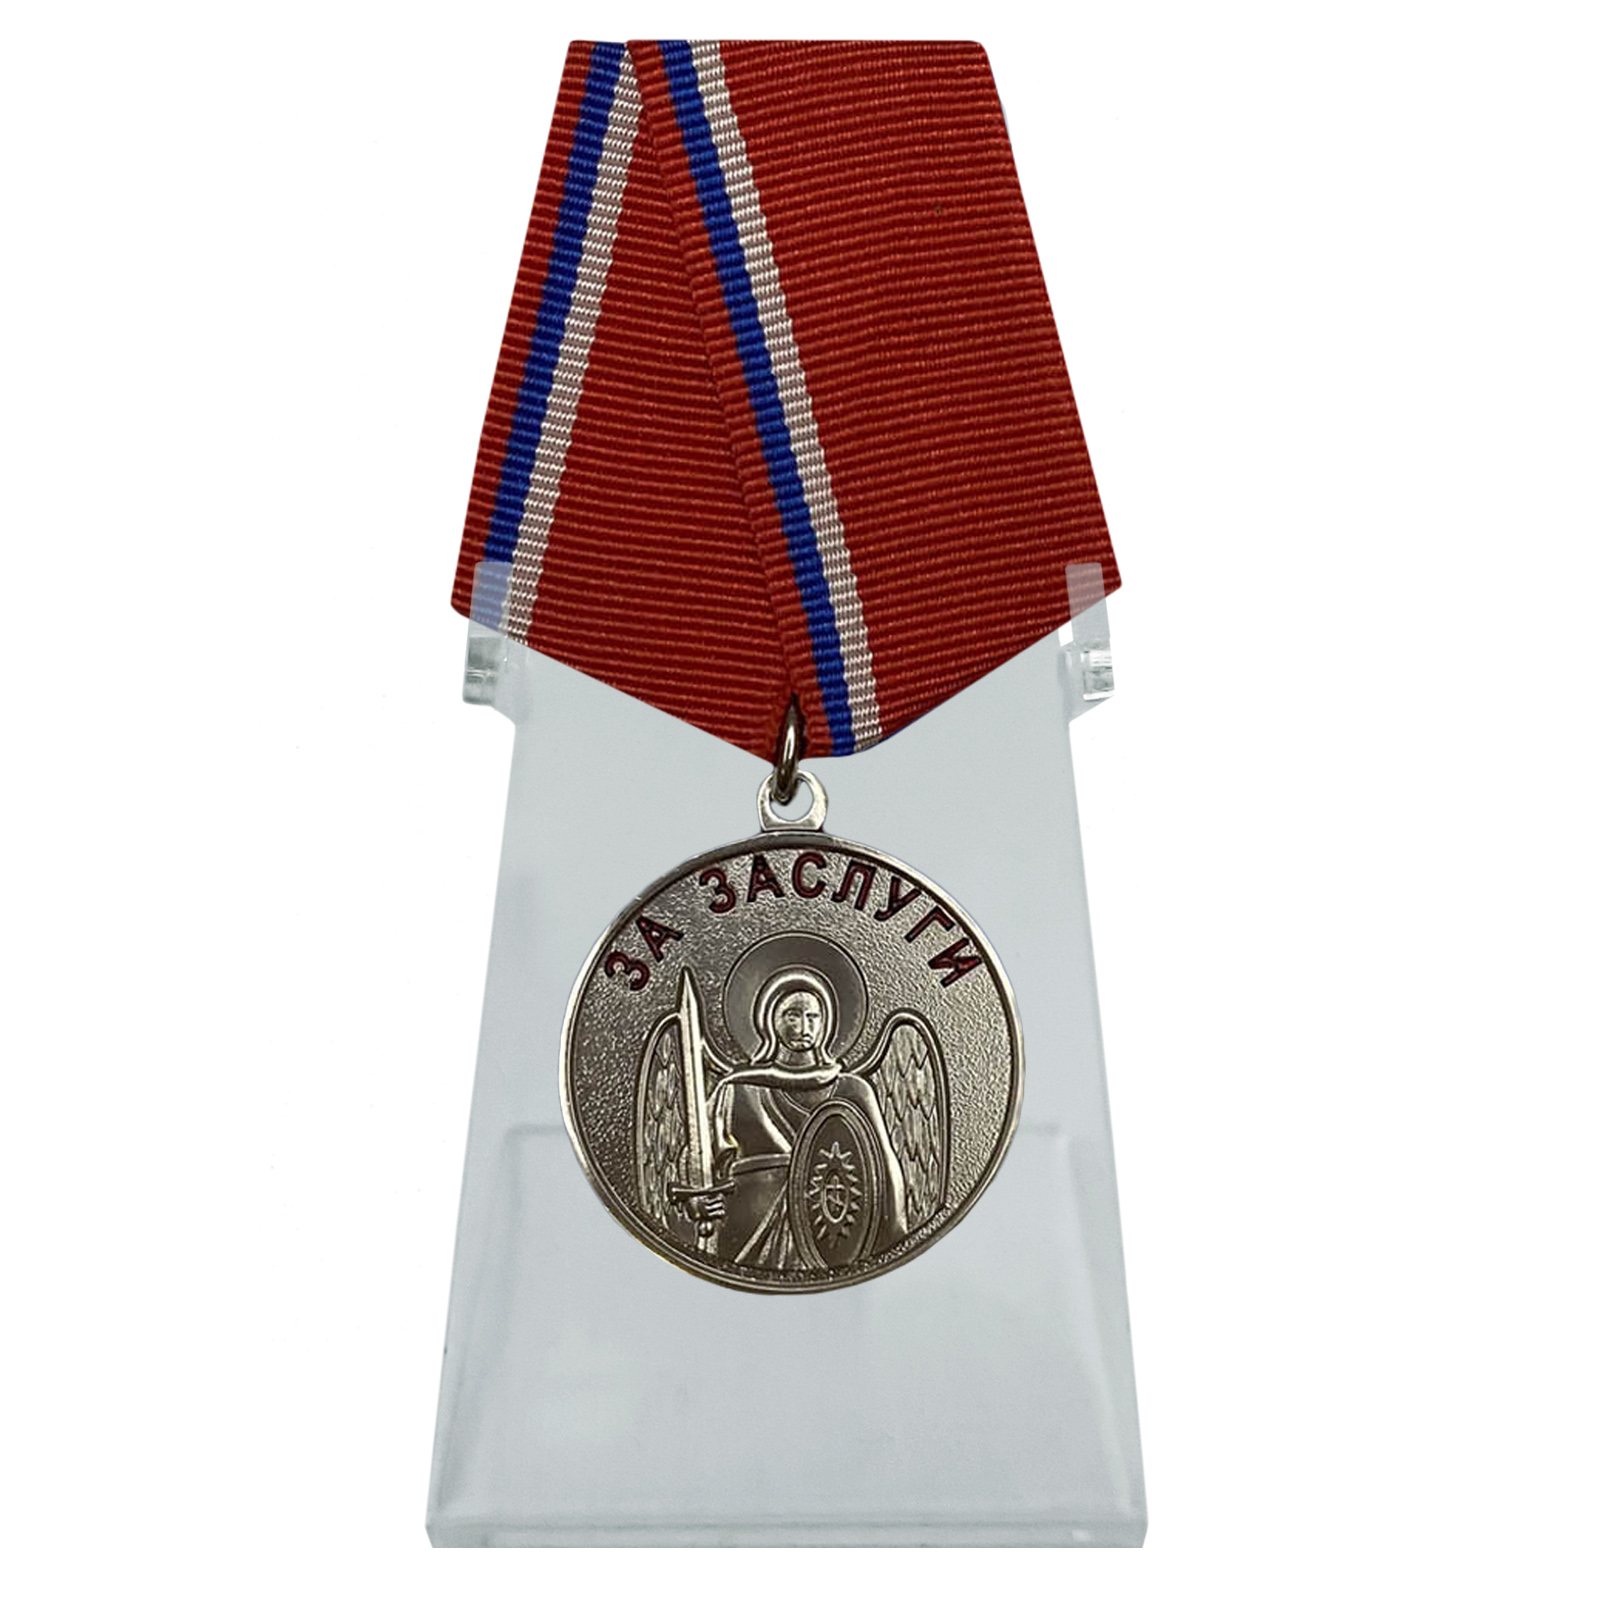 Медаль "За заслуги" на подставке